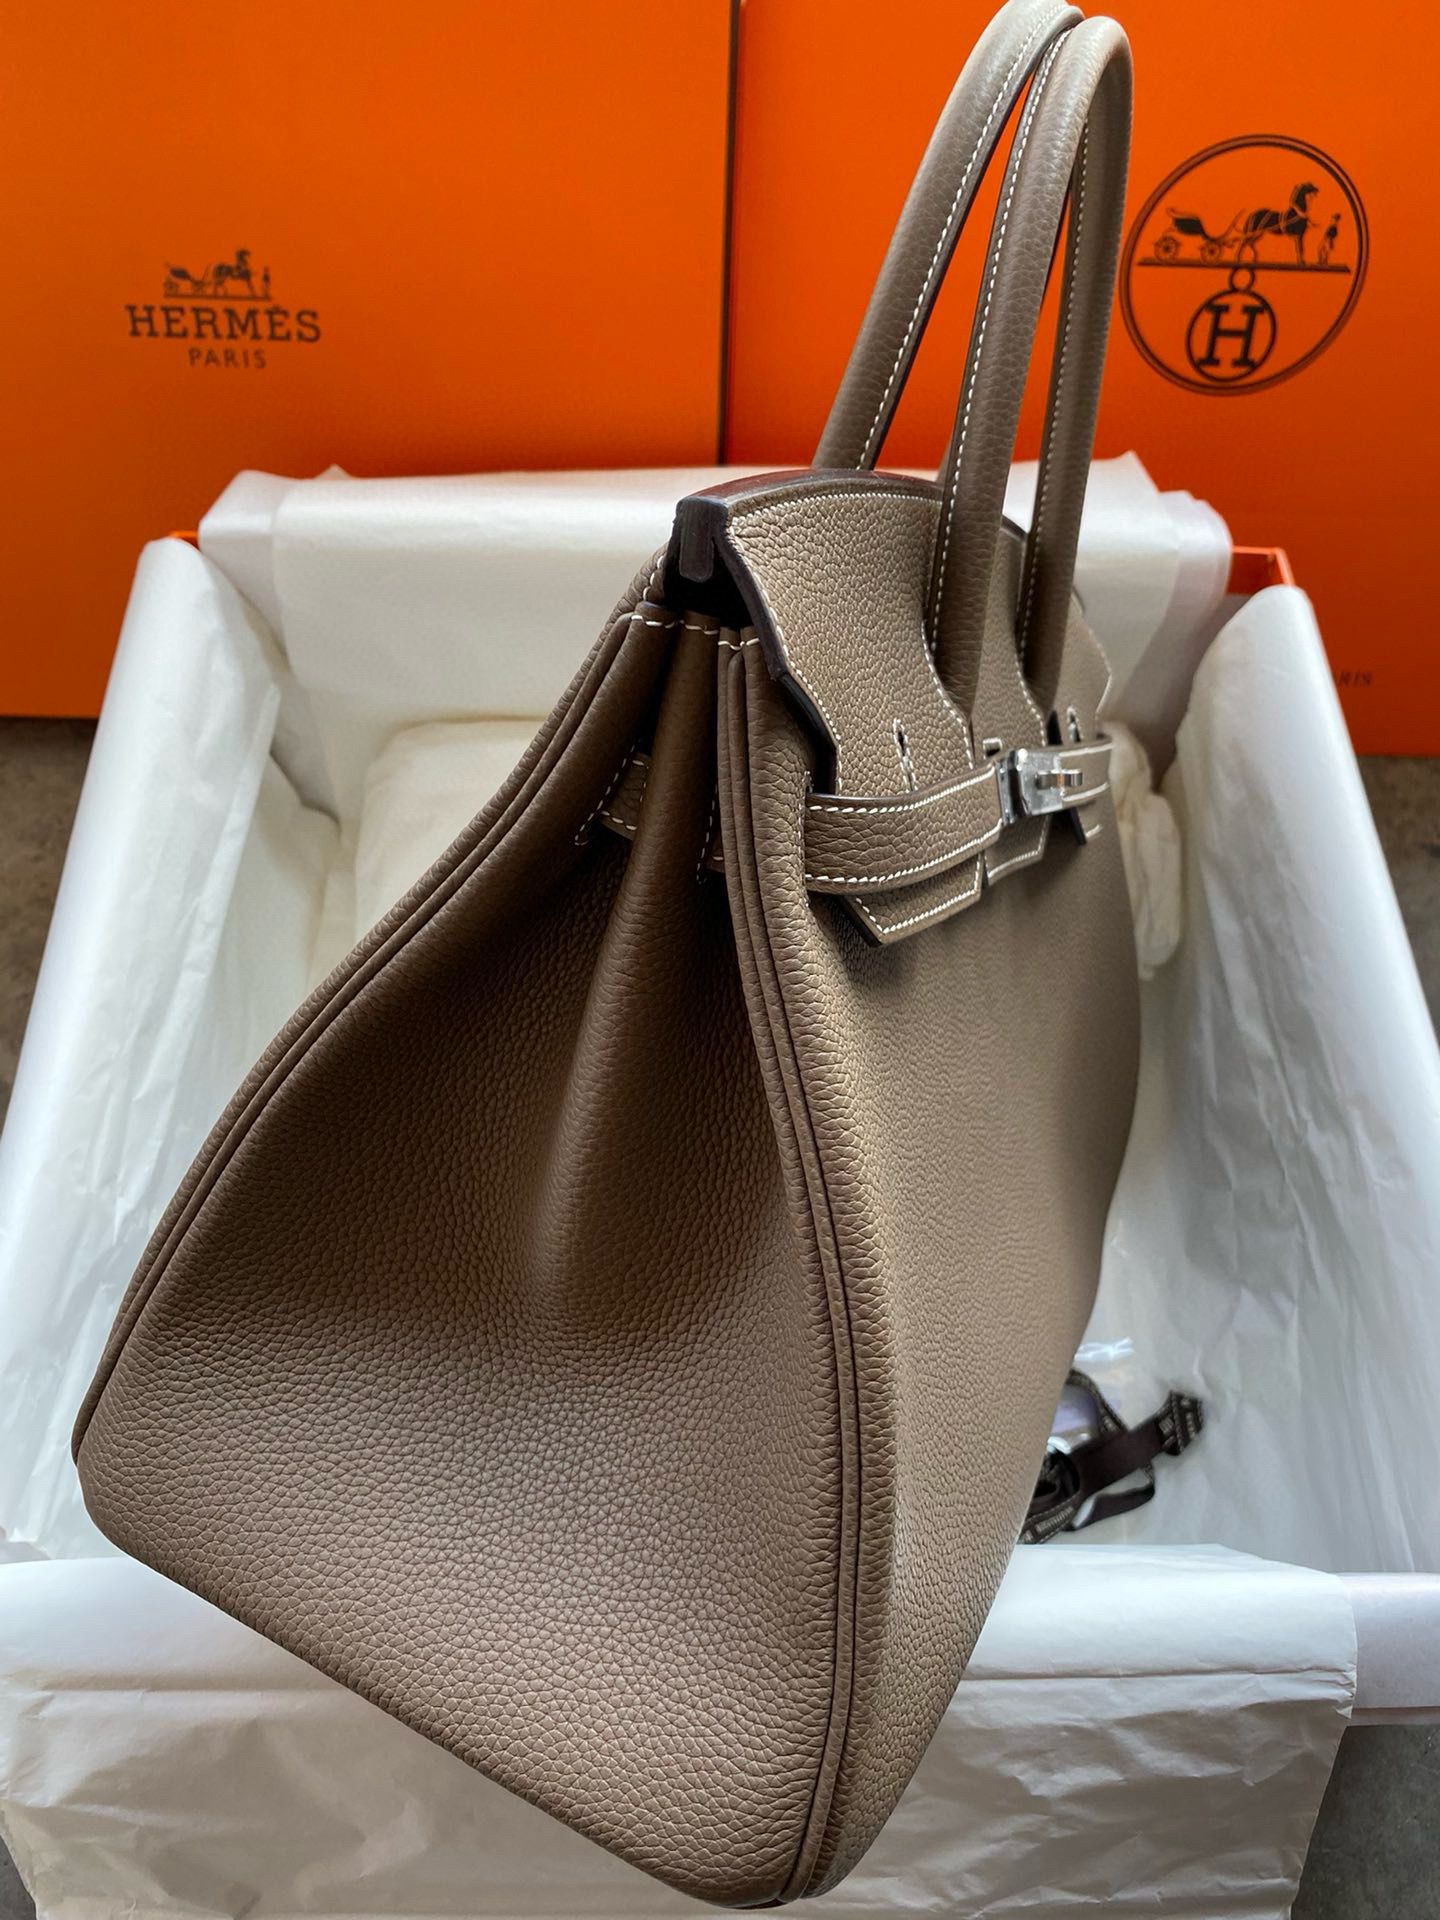 Hermes Birkin Tote Bag Original Togo Leather BK35 Elephant Gray